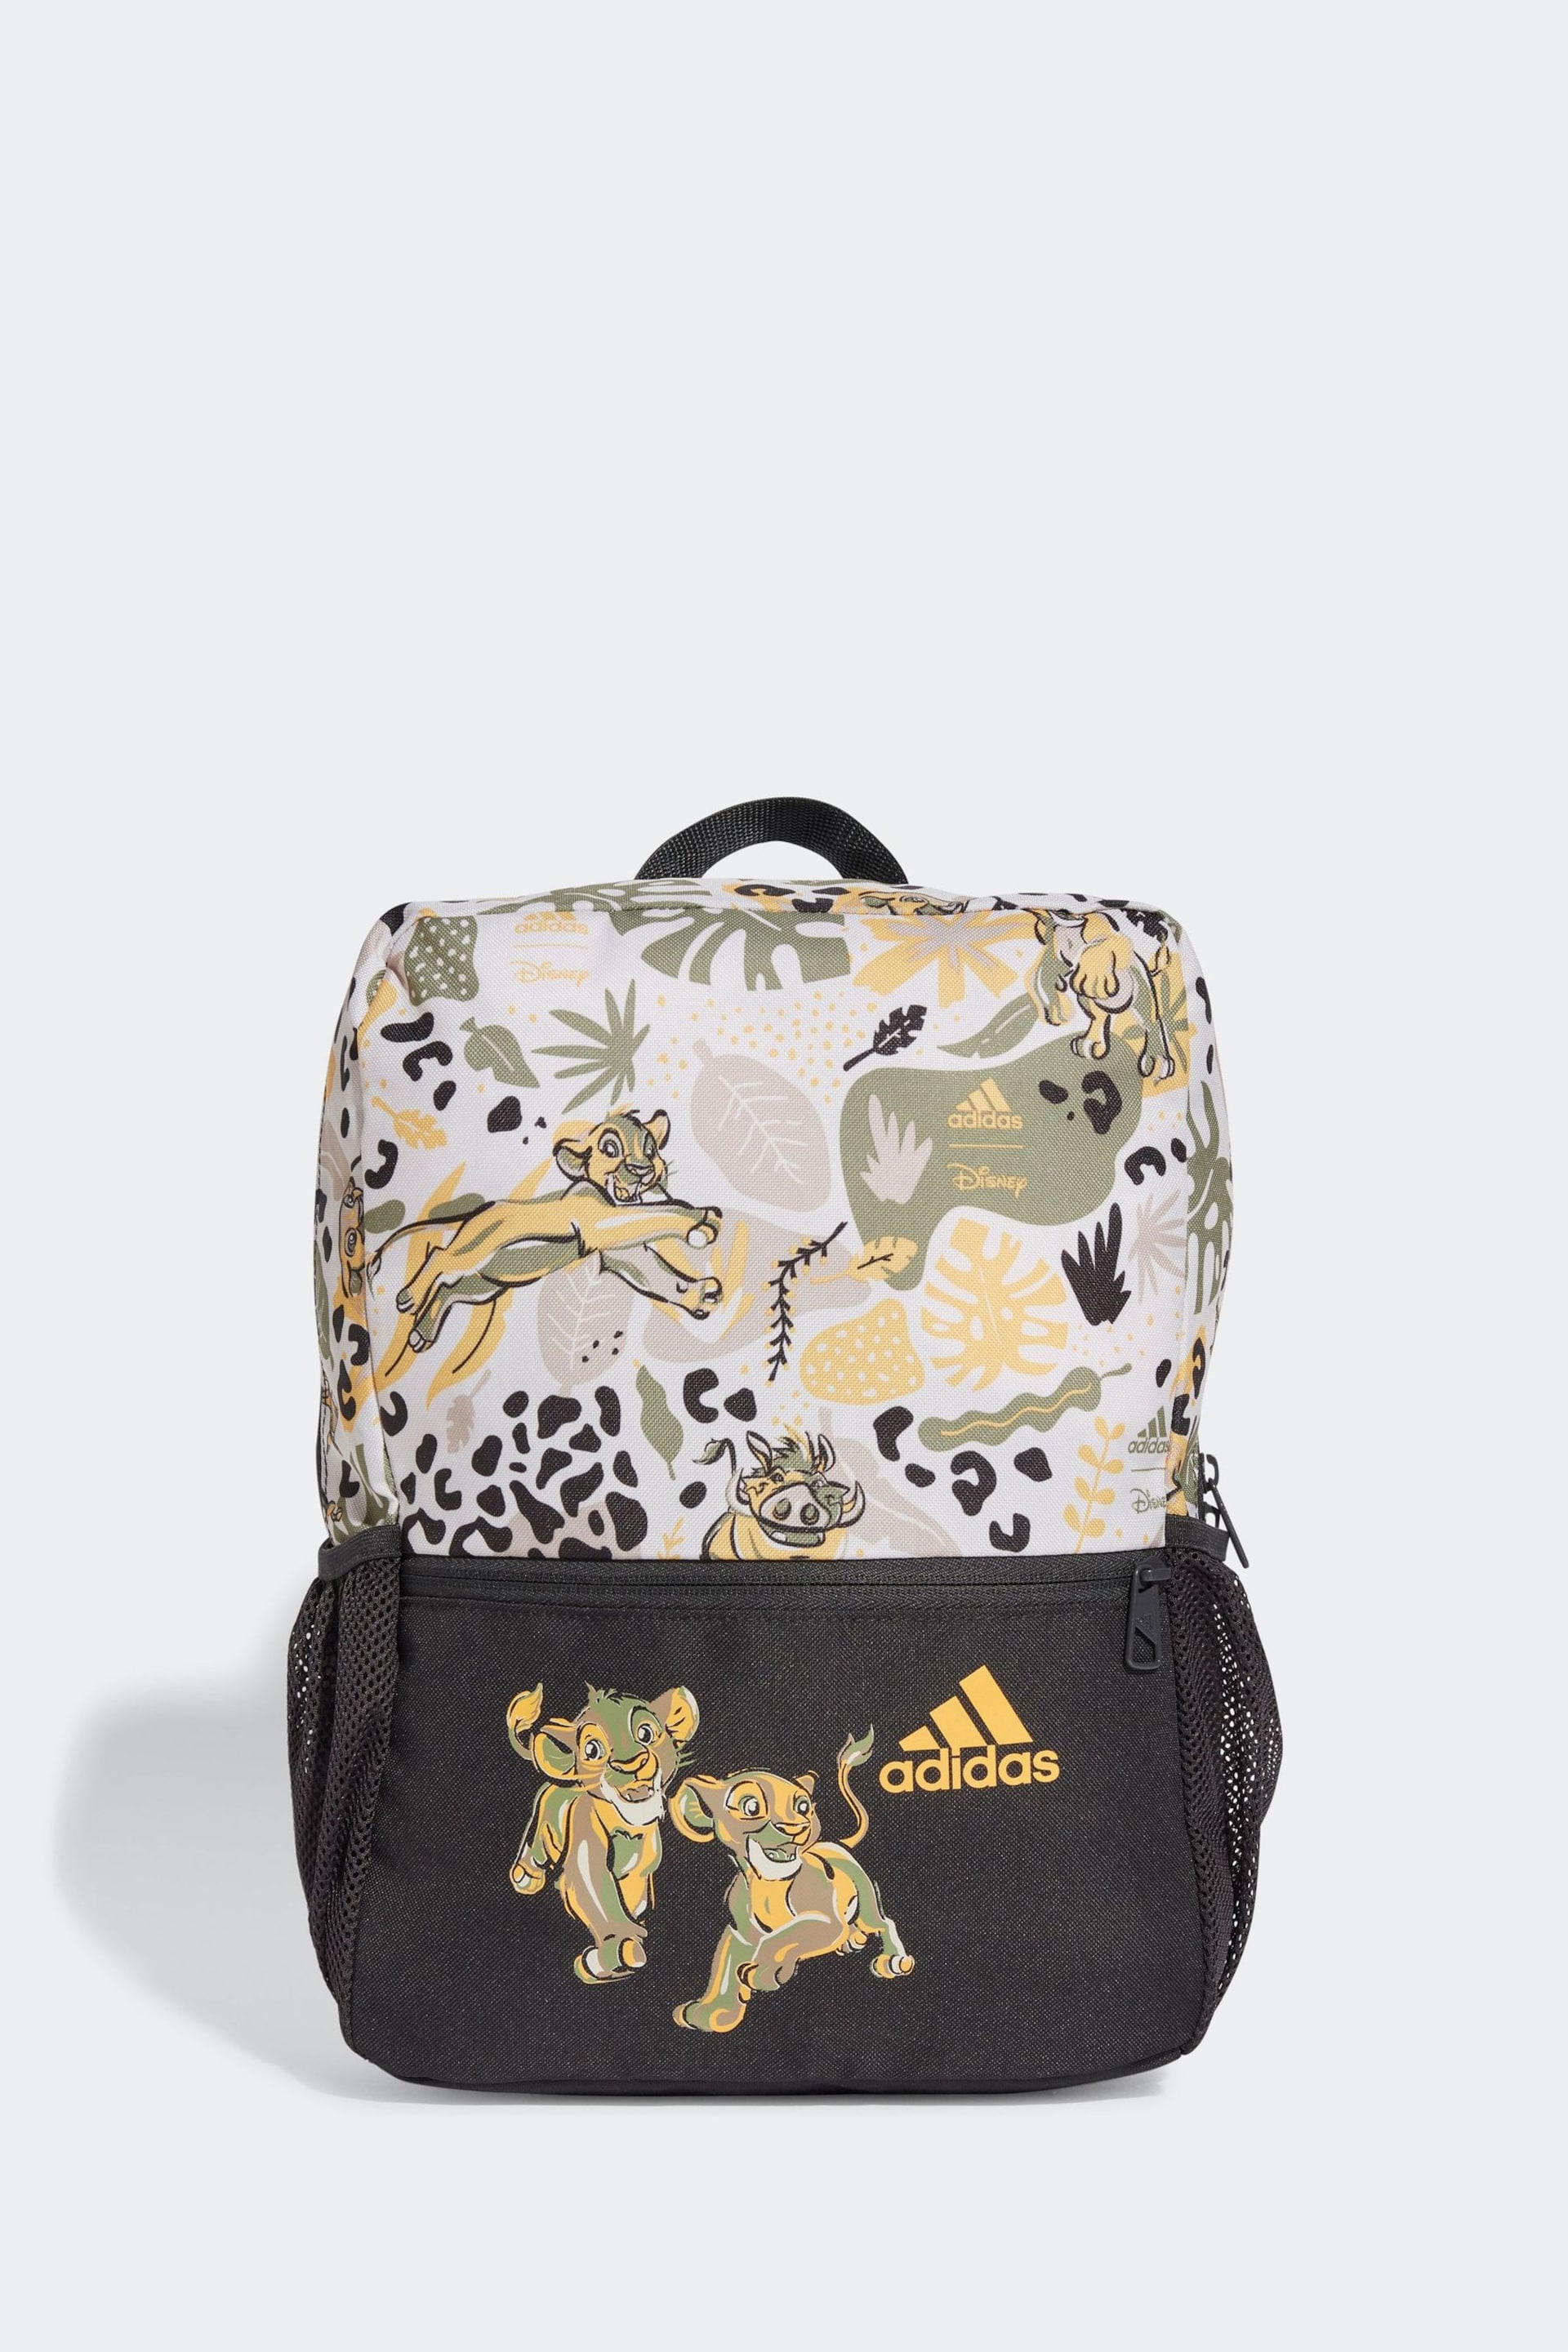 adidas Grey Lion King Backpack - Image 1 of 7